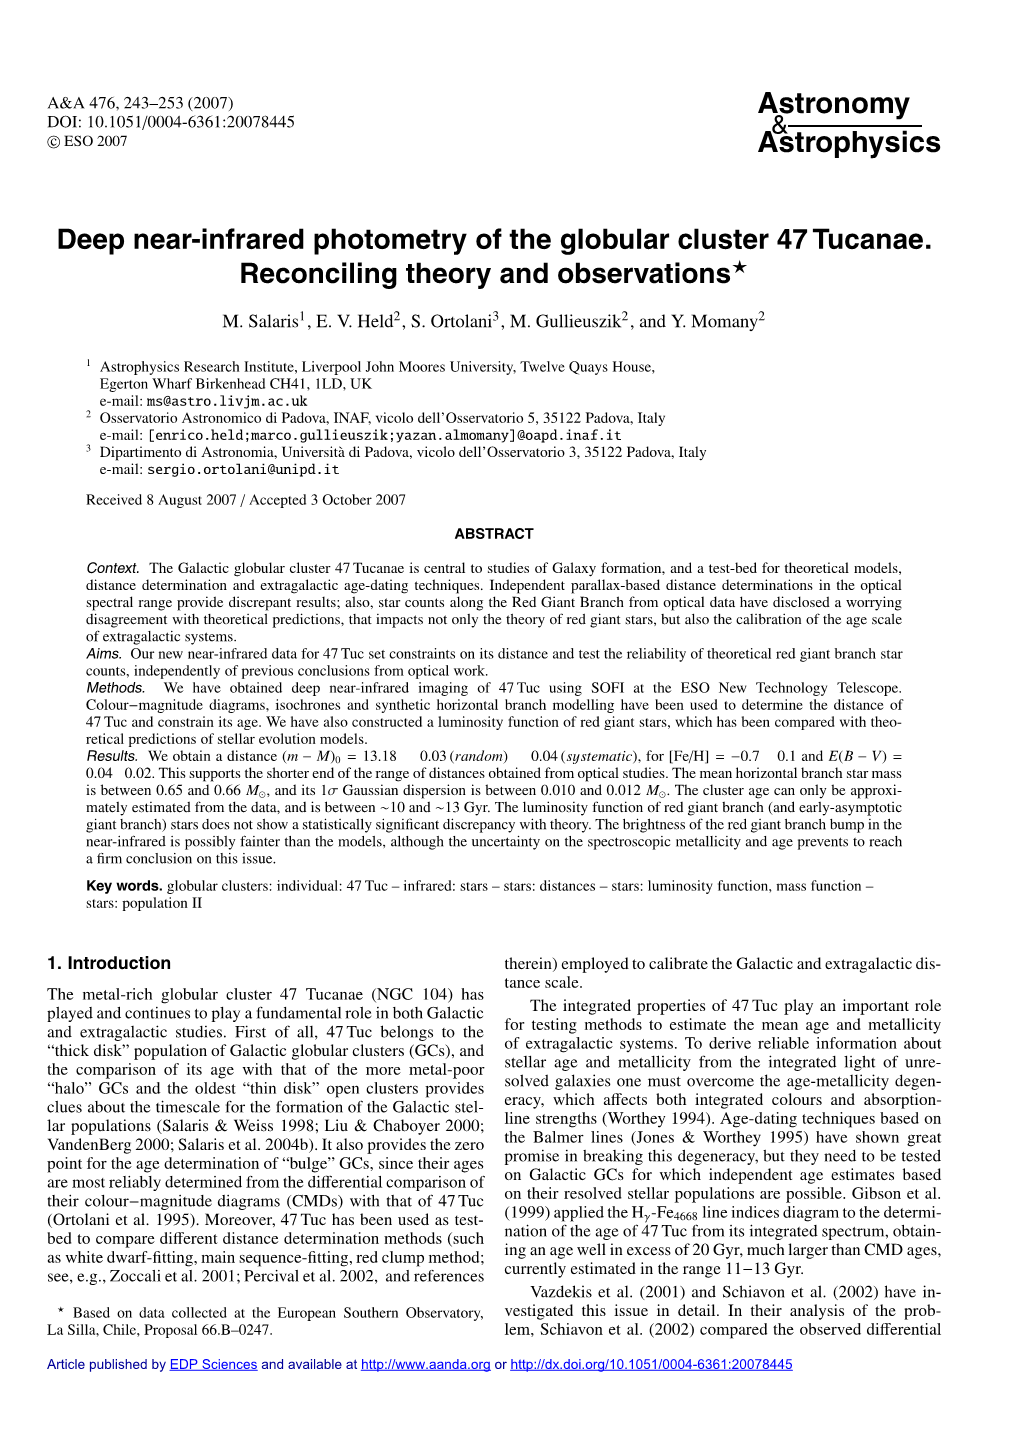 Deep Near-Infrared Photometry of the Globular Cluster 47 Tucanae